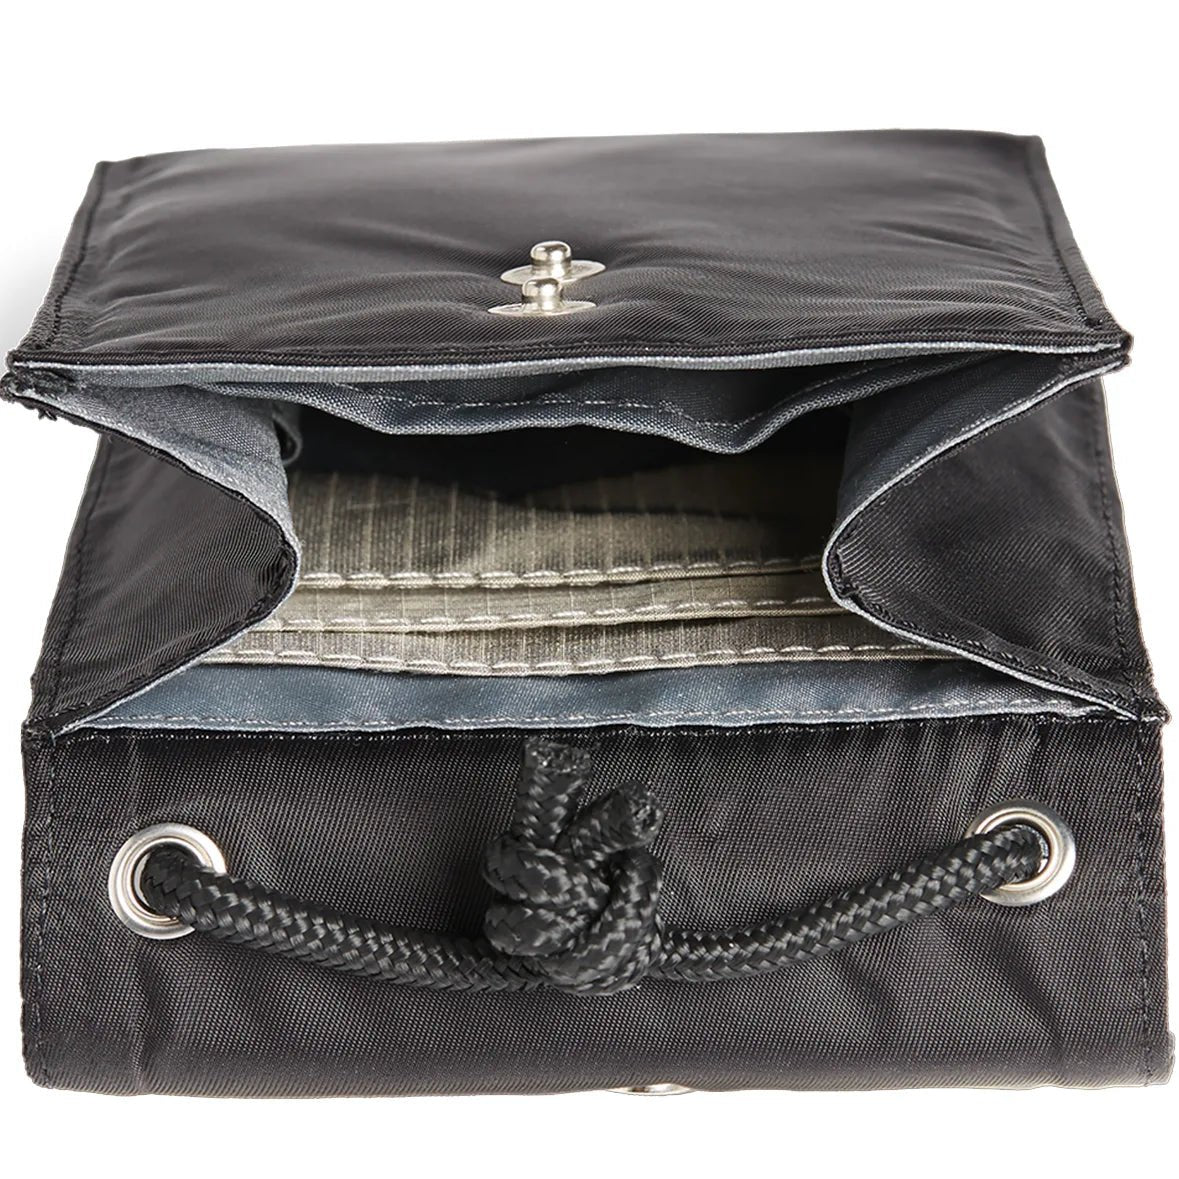 Stratic Pure Messenger Bag XS 20 cm - Black